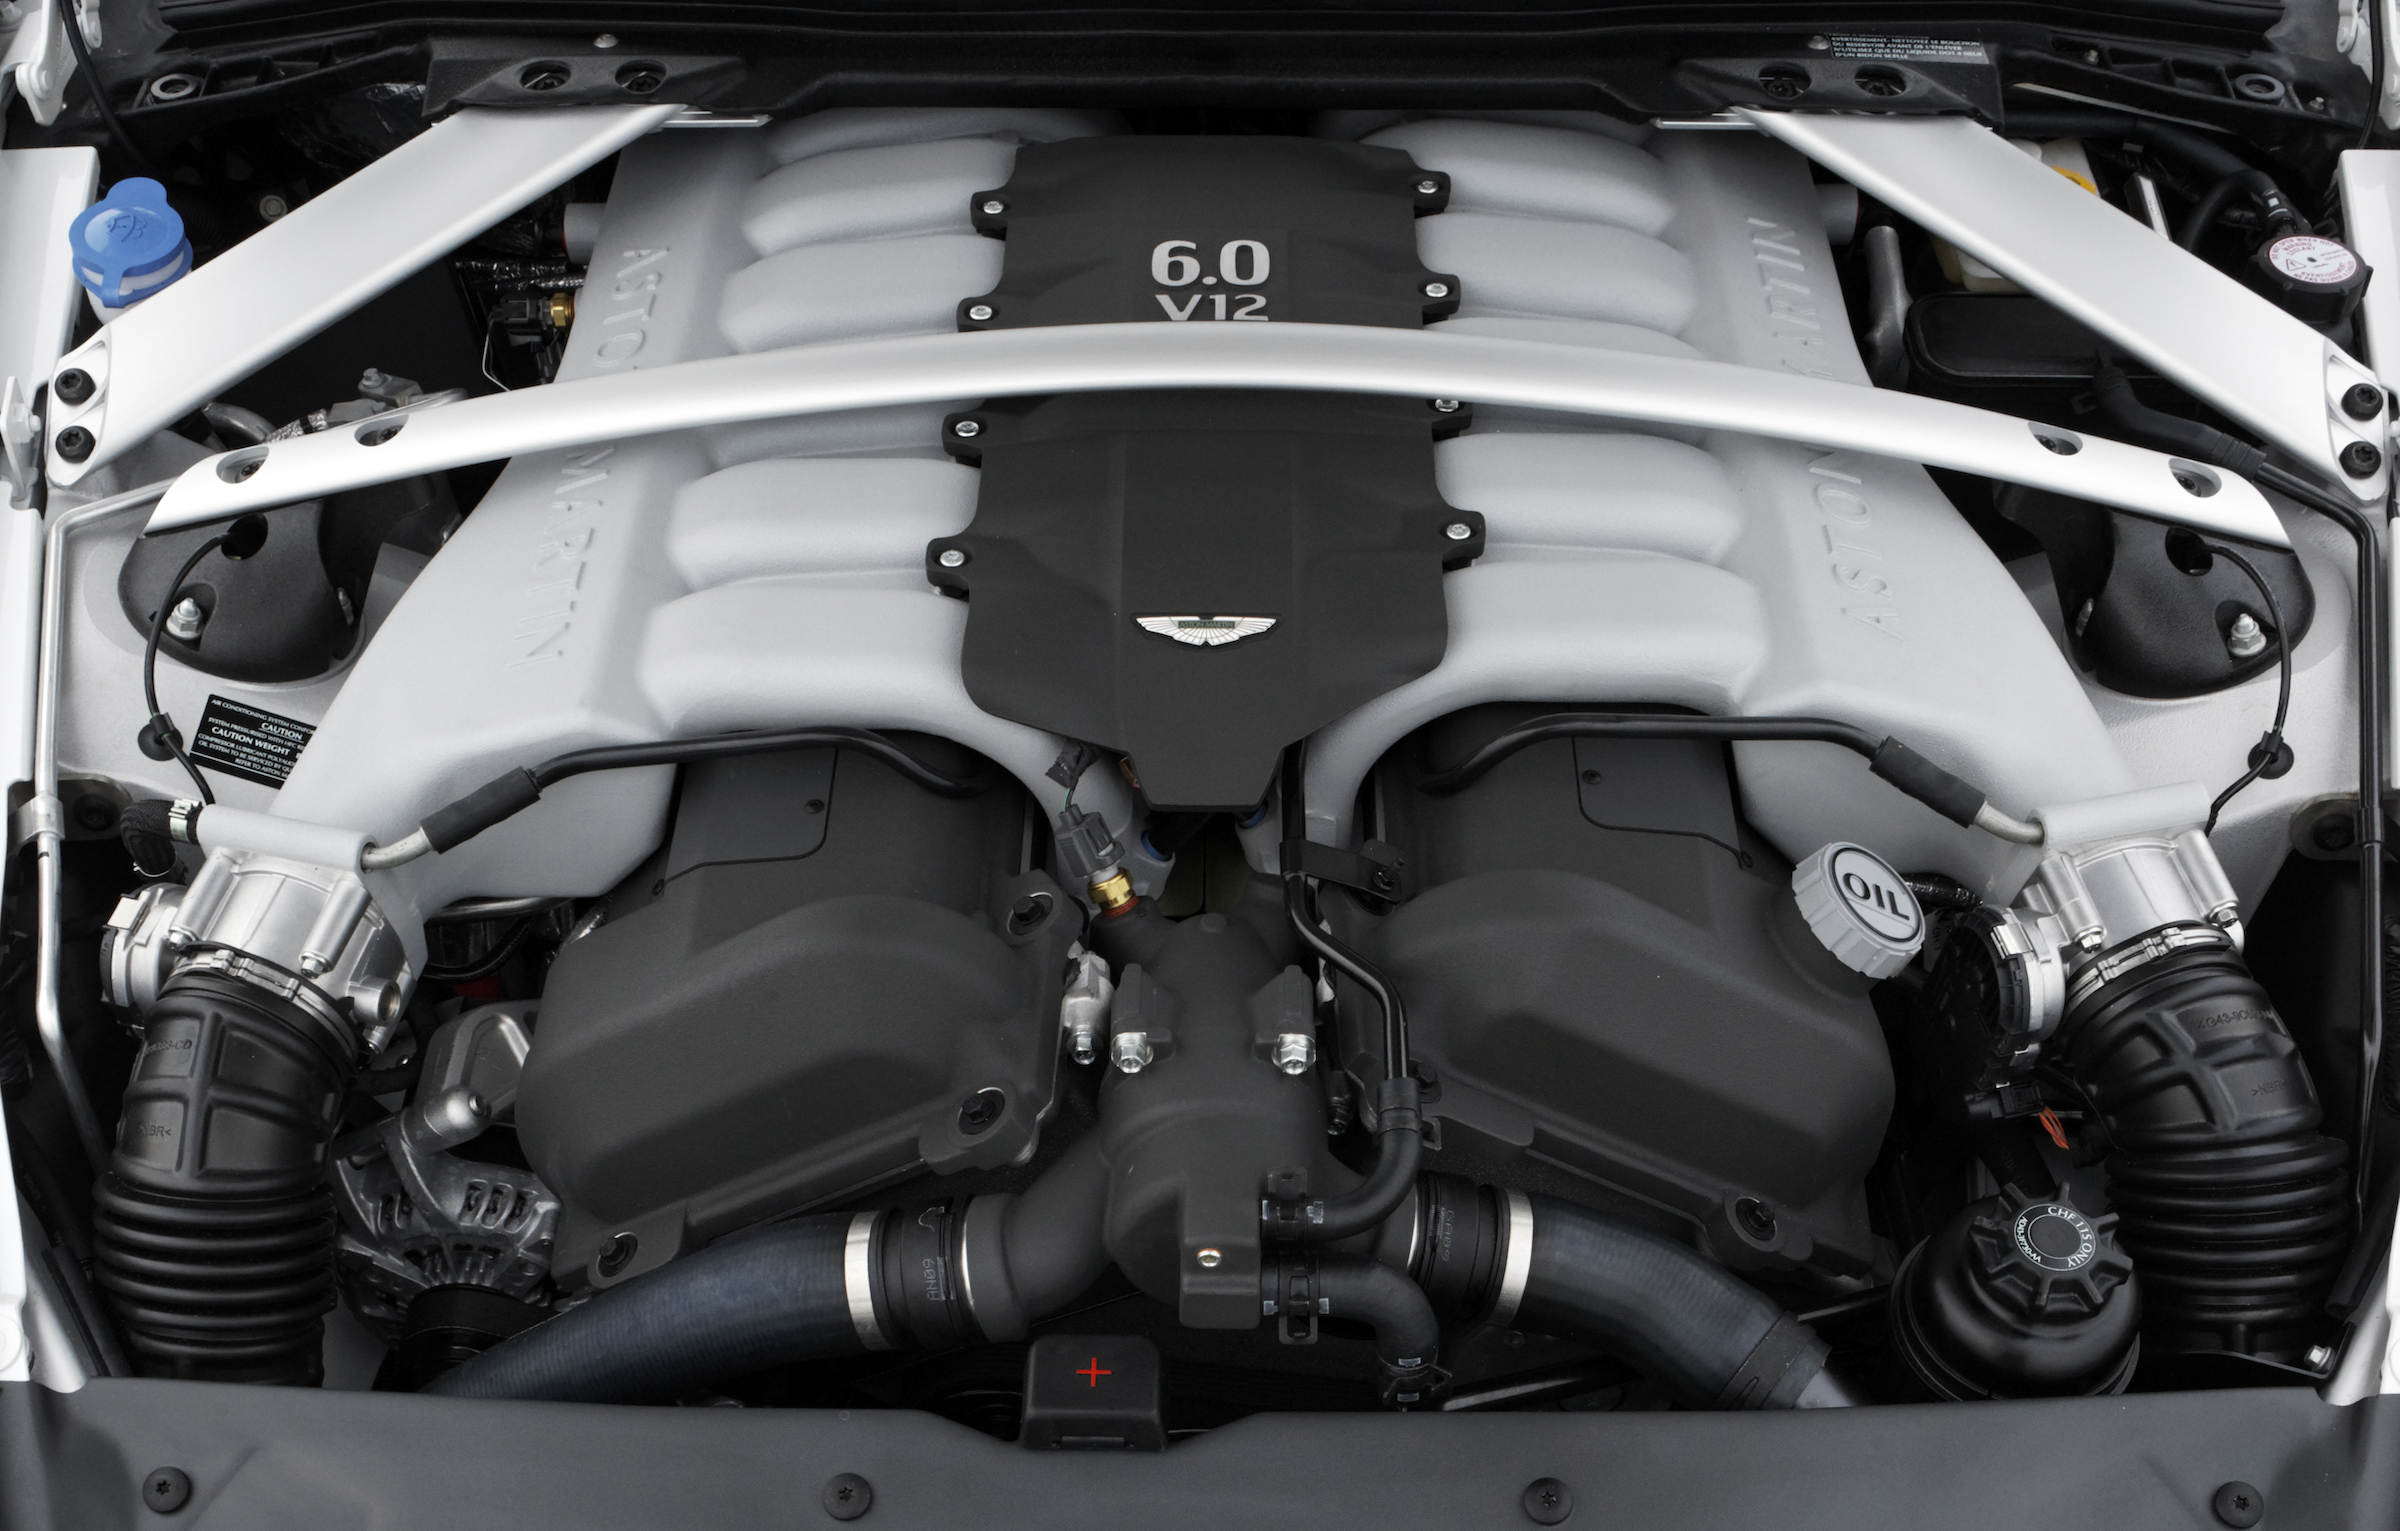 Aston Martin DB9 V12 engine